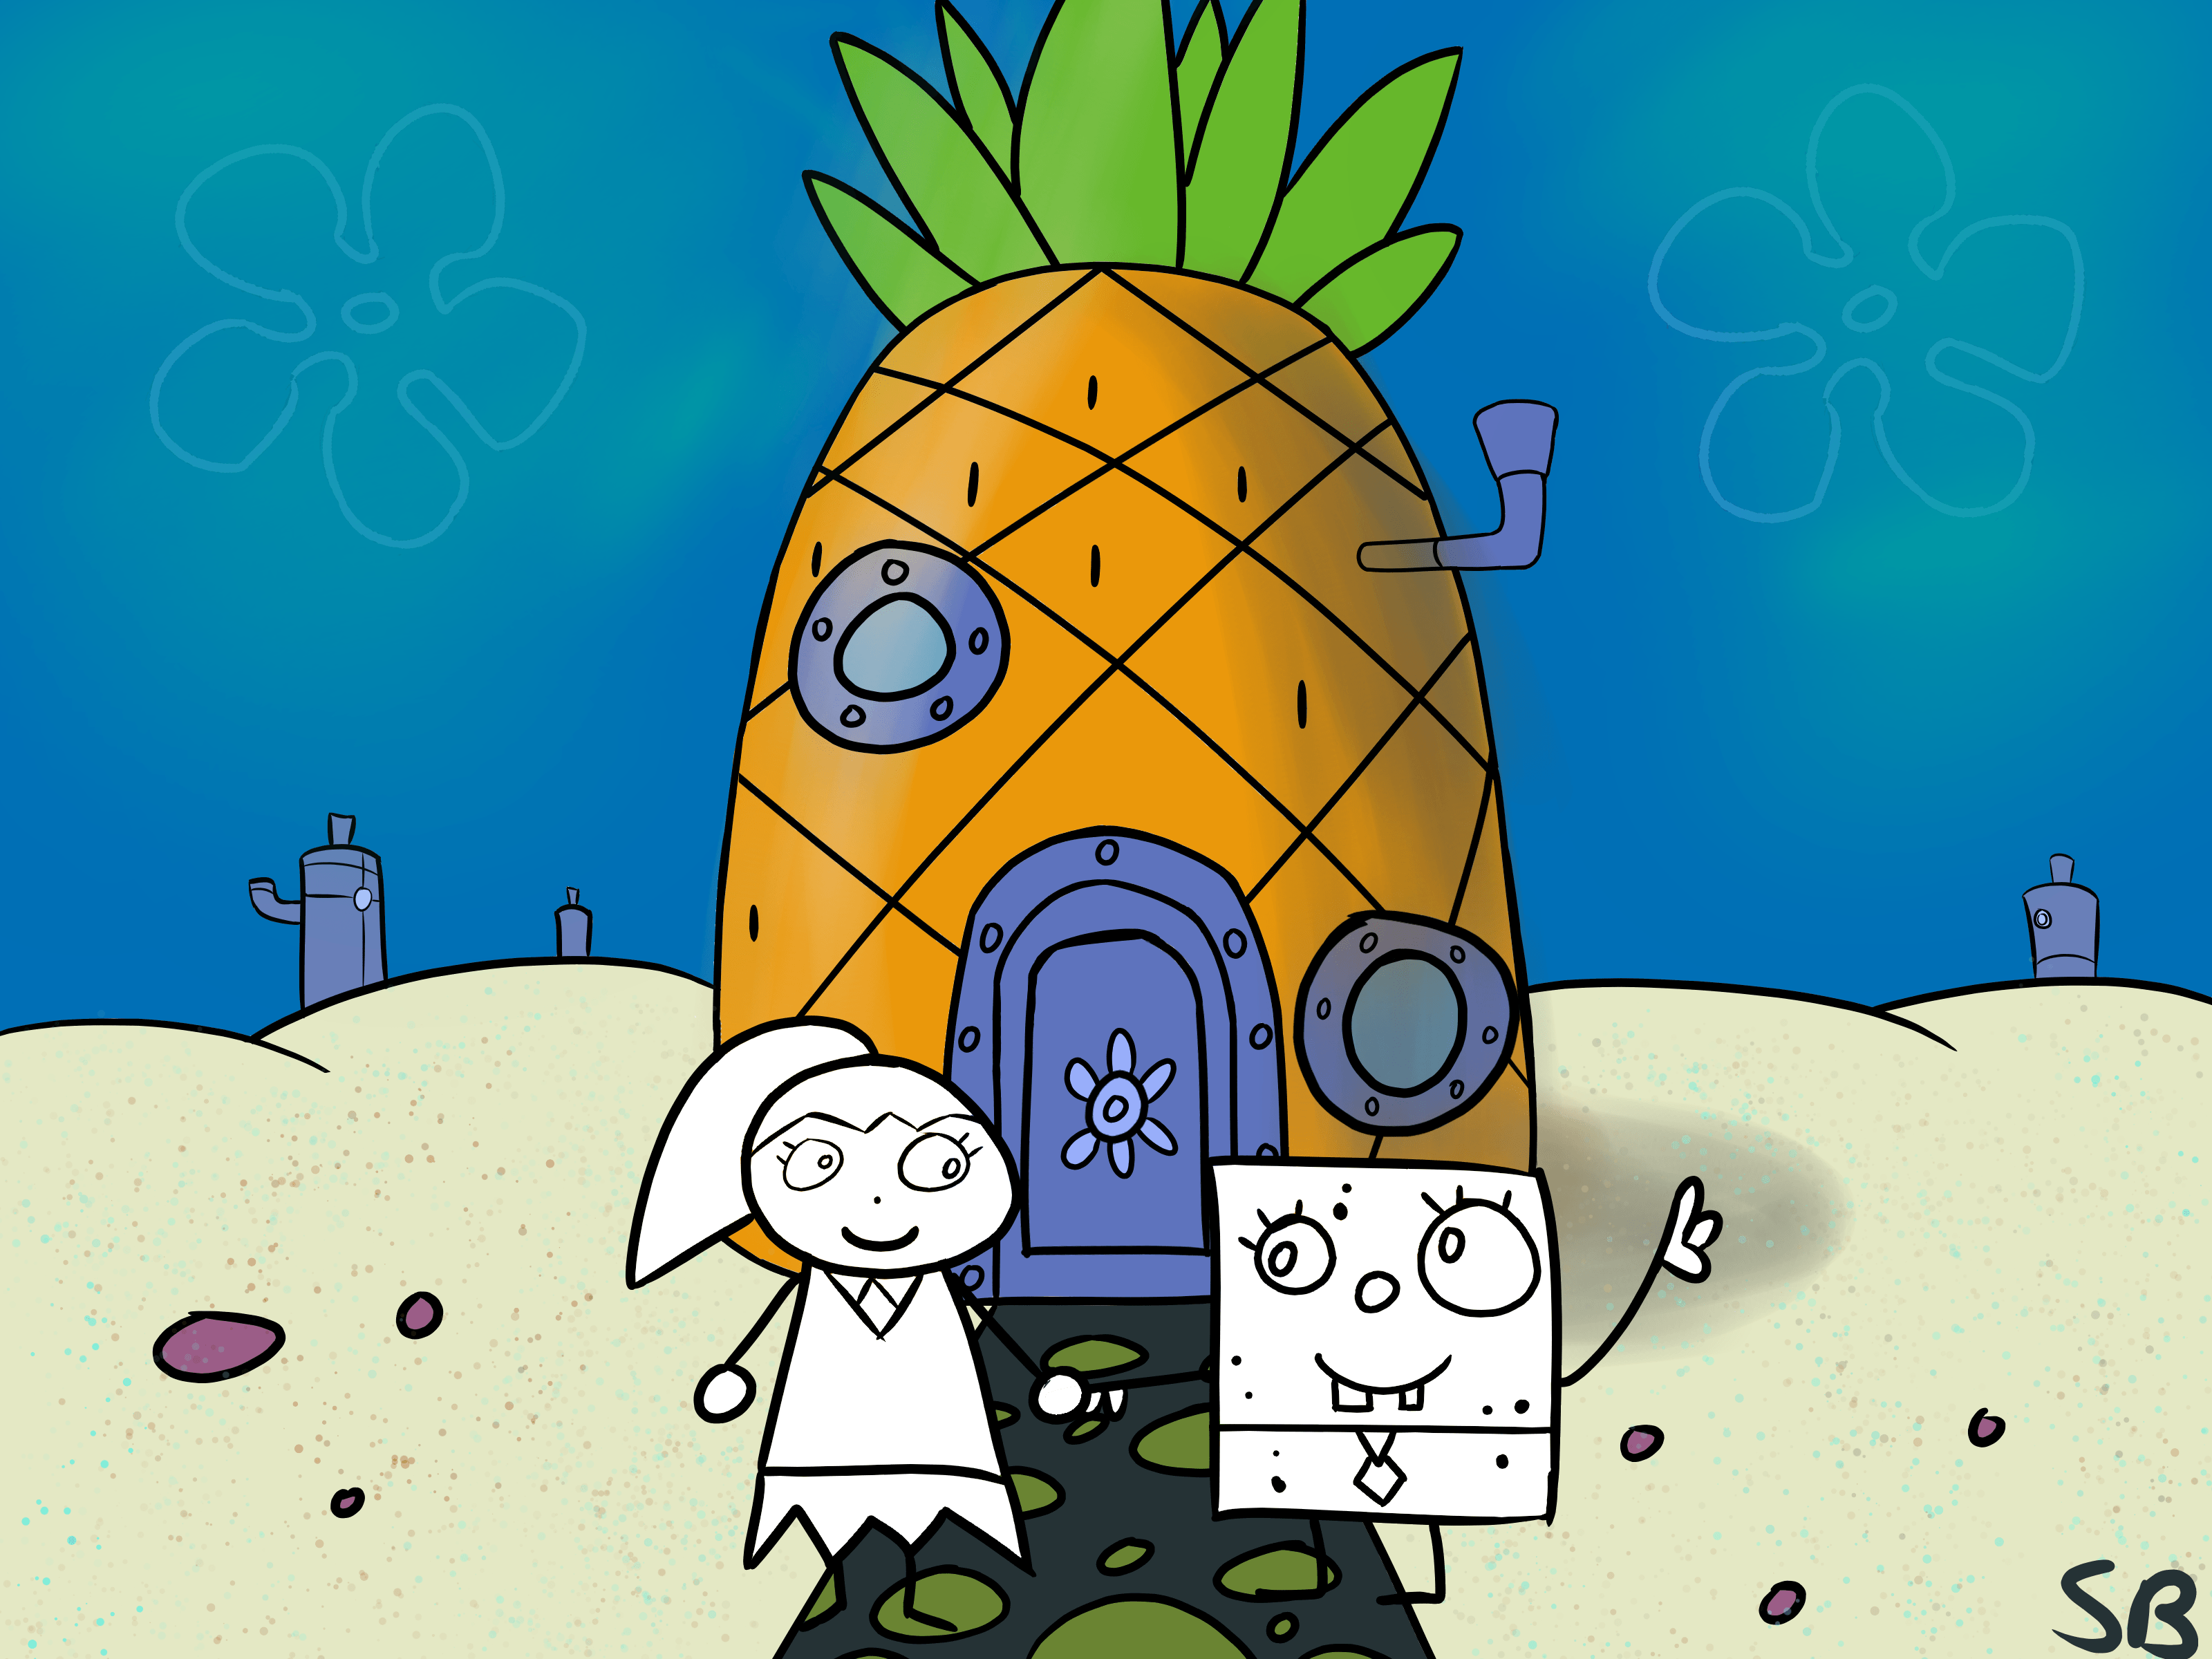 I drew Doodlika and DoodleBob for the art contest